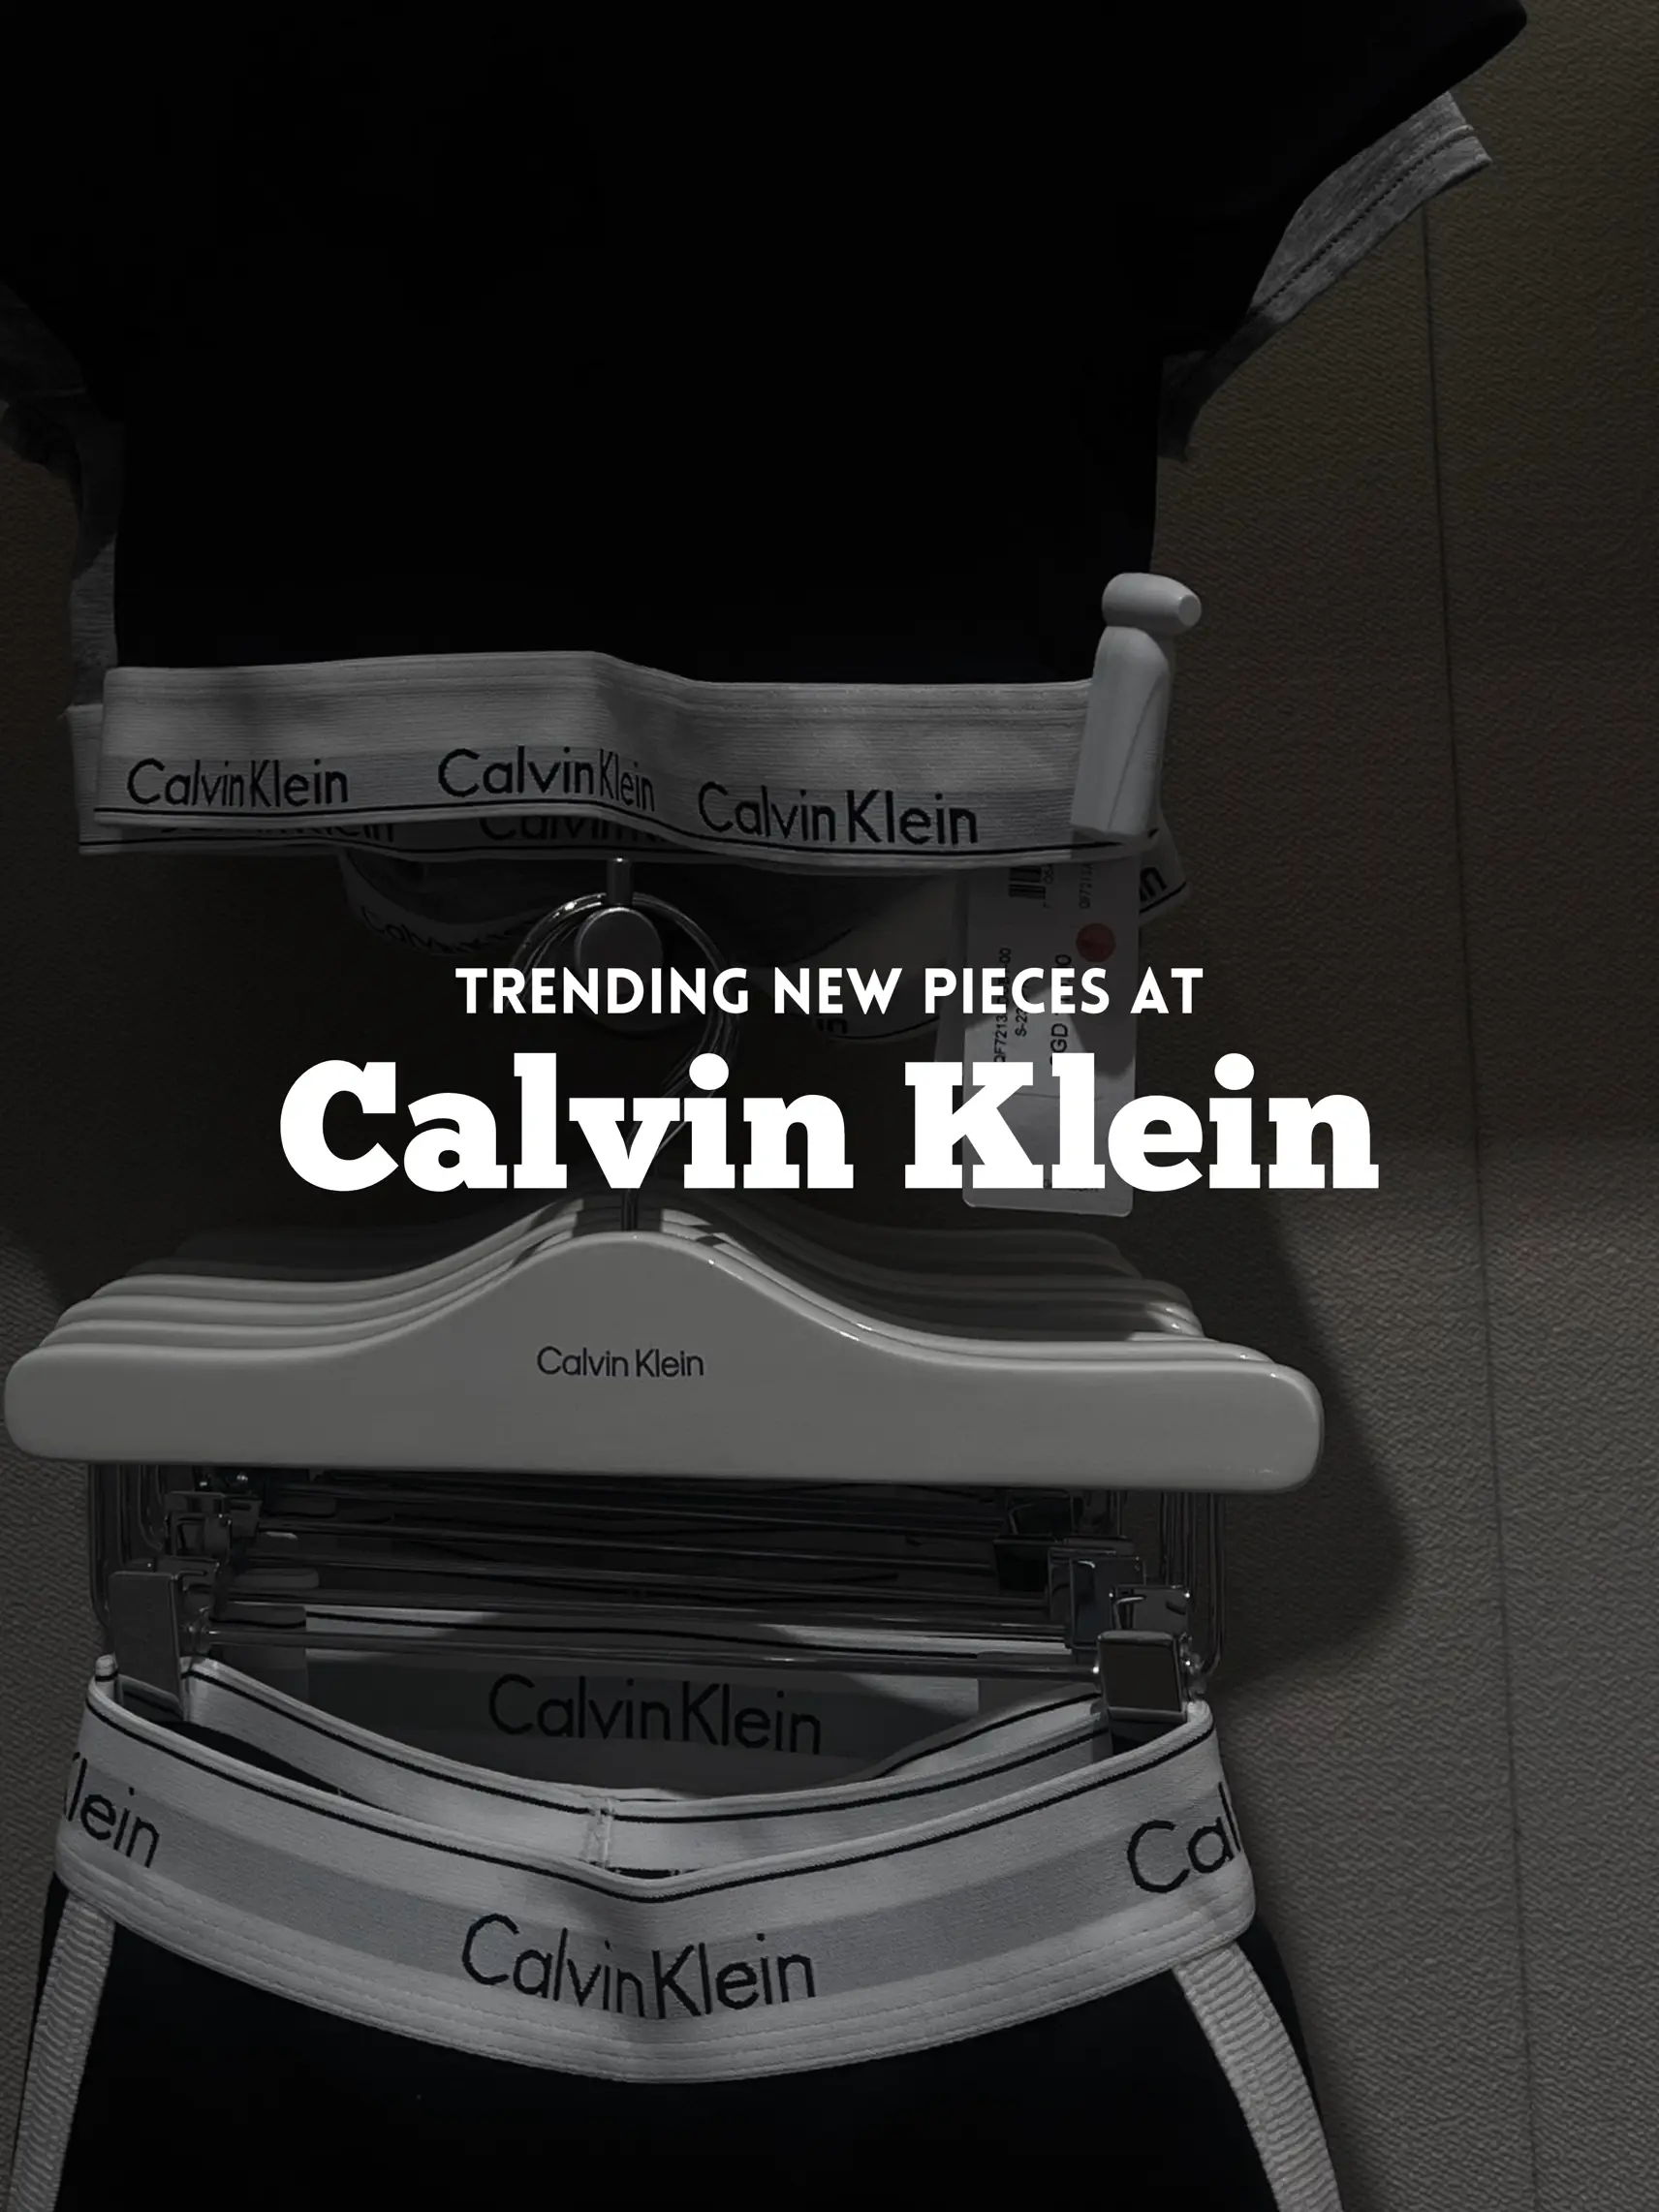 Calvin Klein Women's Monochrome Lightly Lined Bralette - Kingly